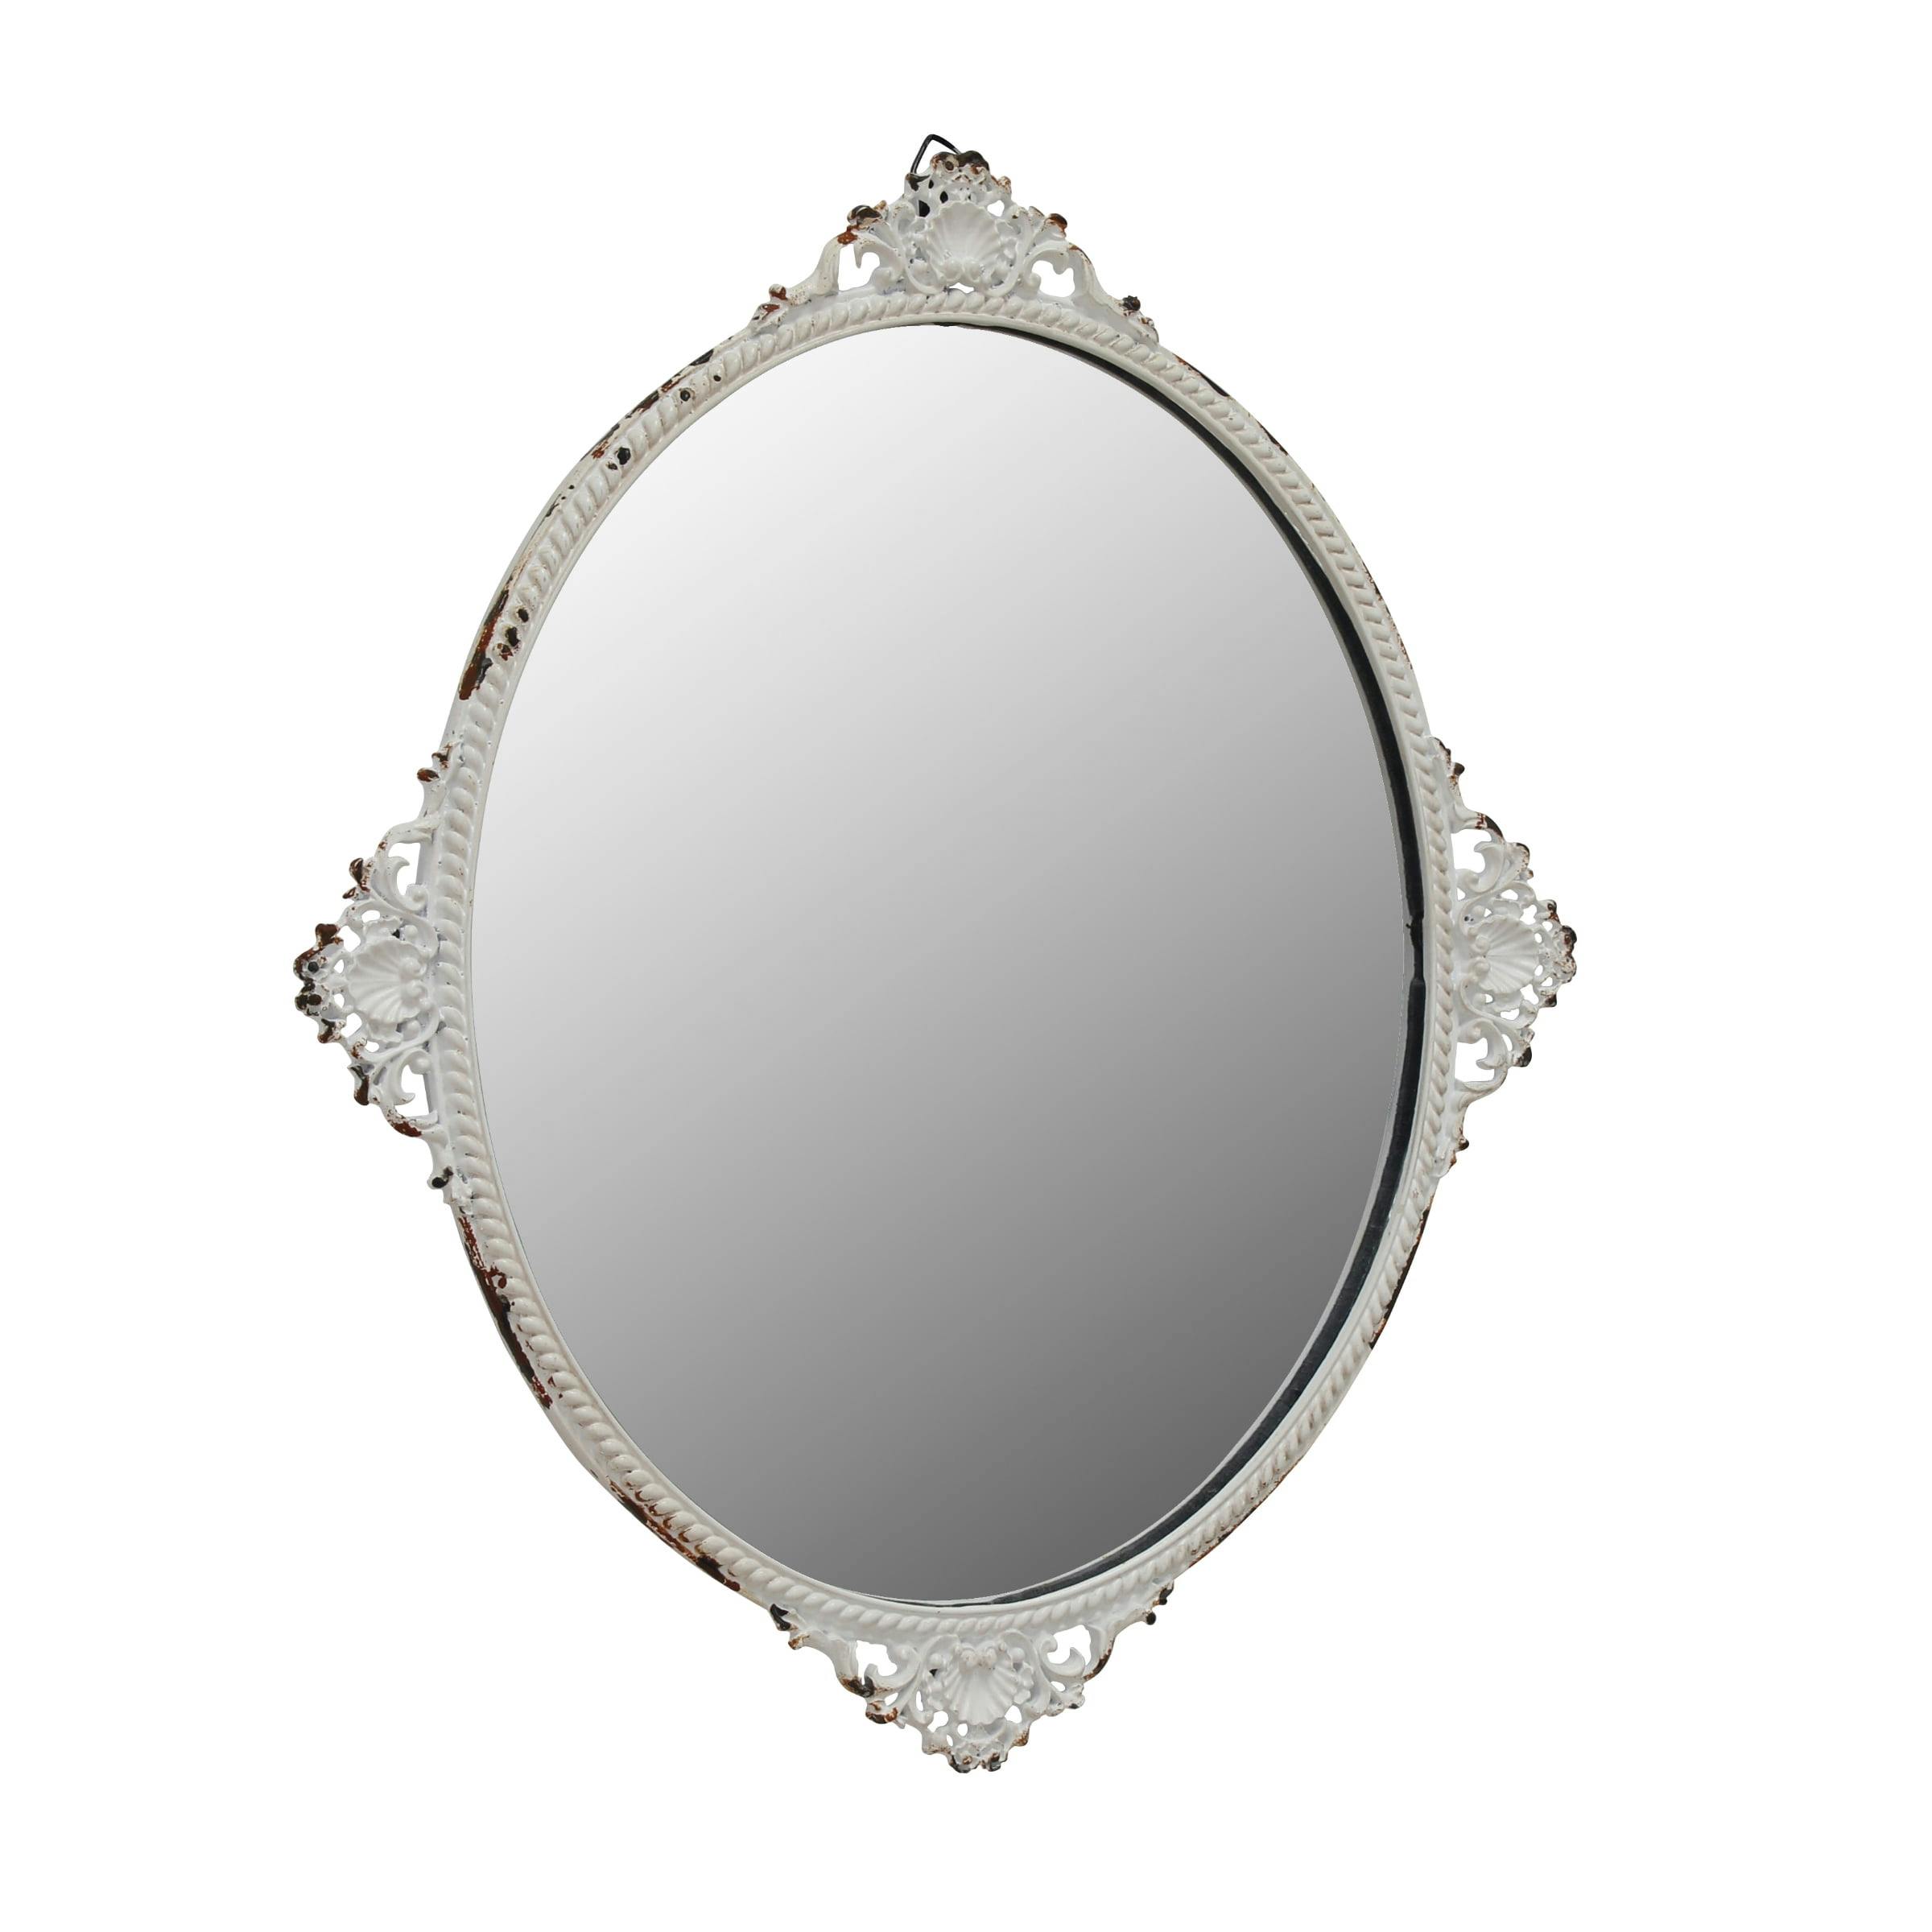 Elegant Oval Off-White Distressed Metal Wall Mirror